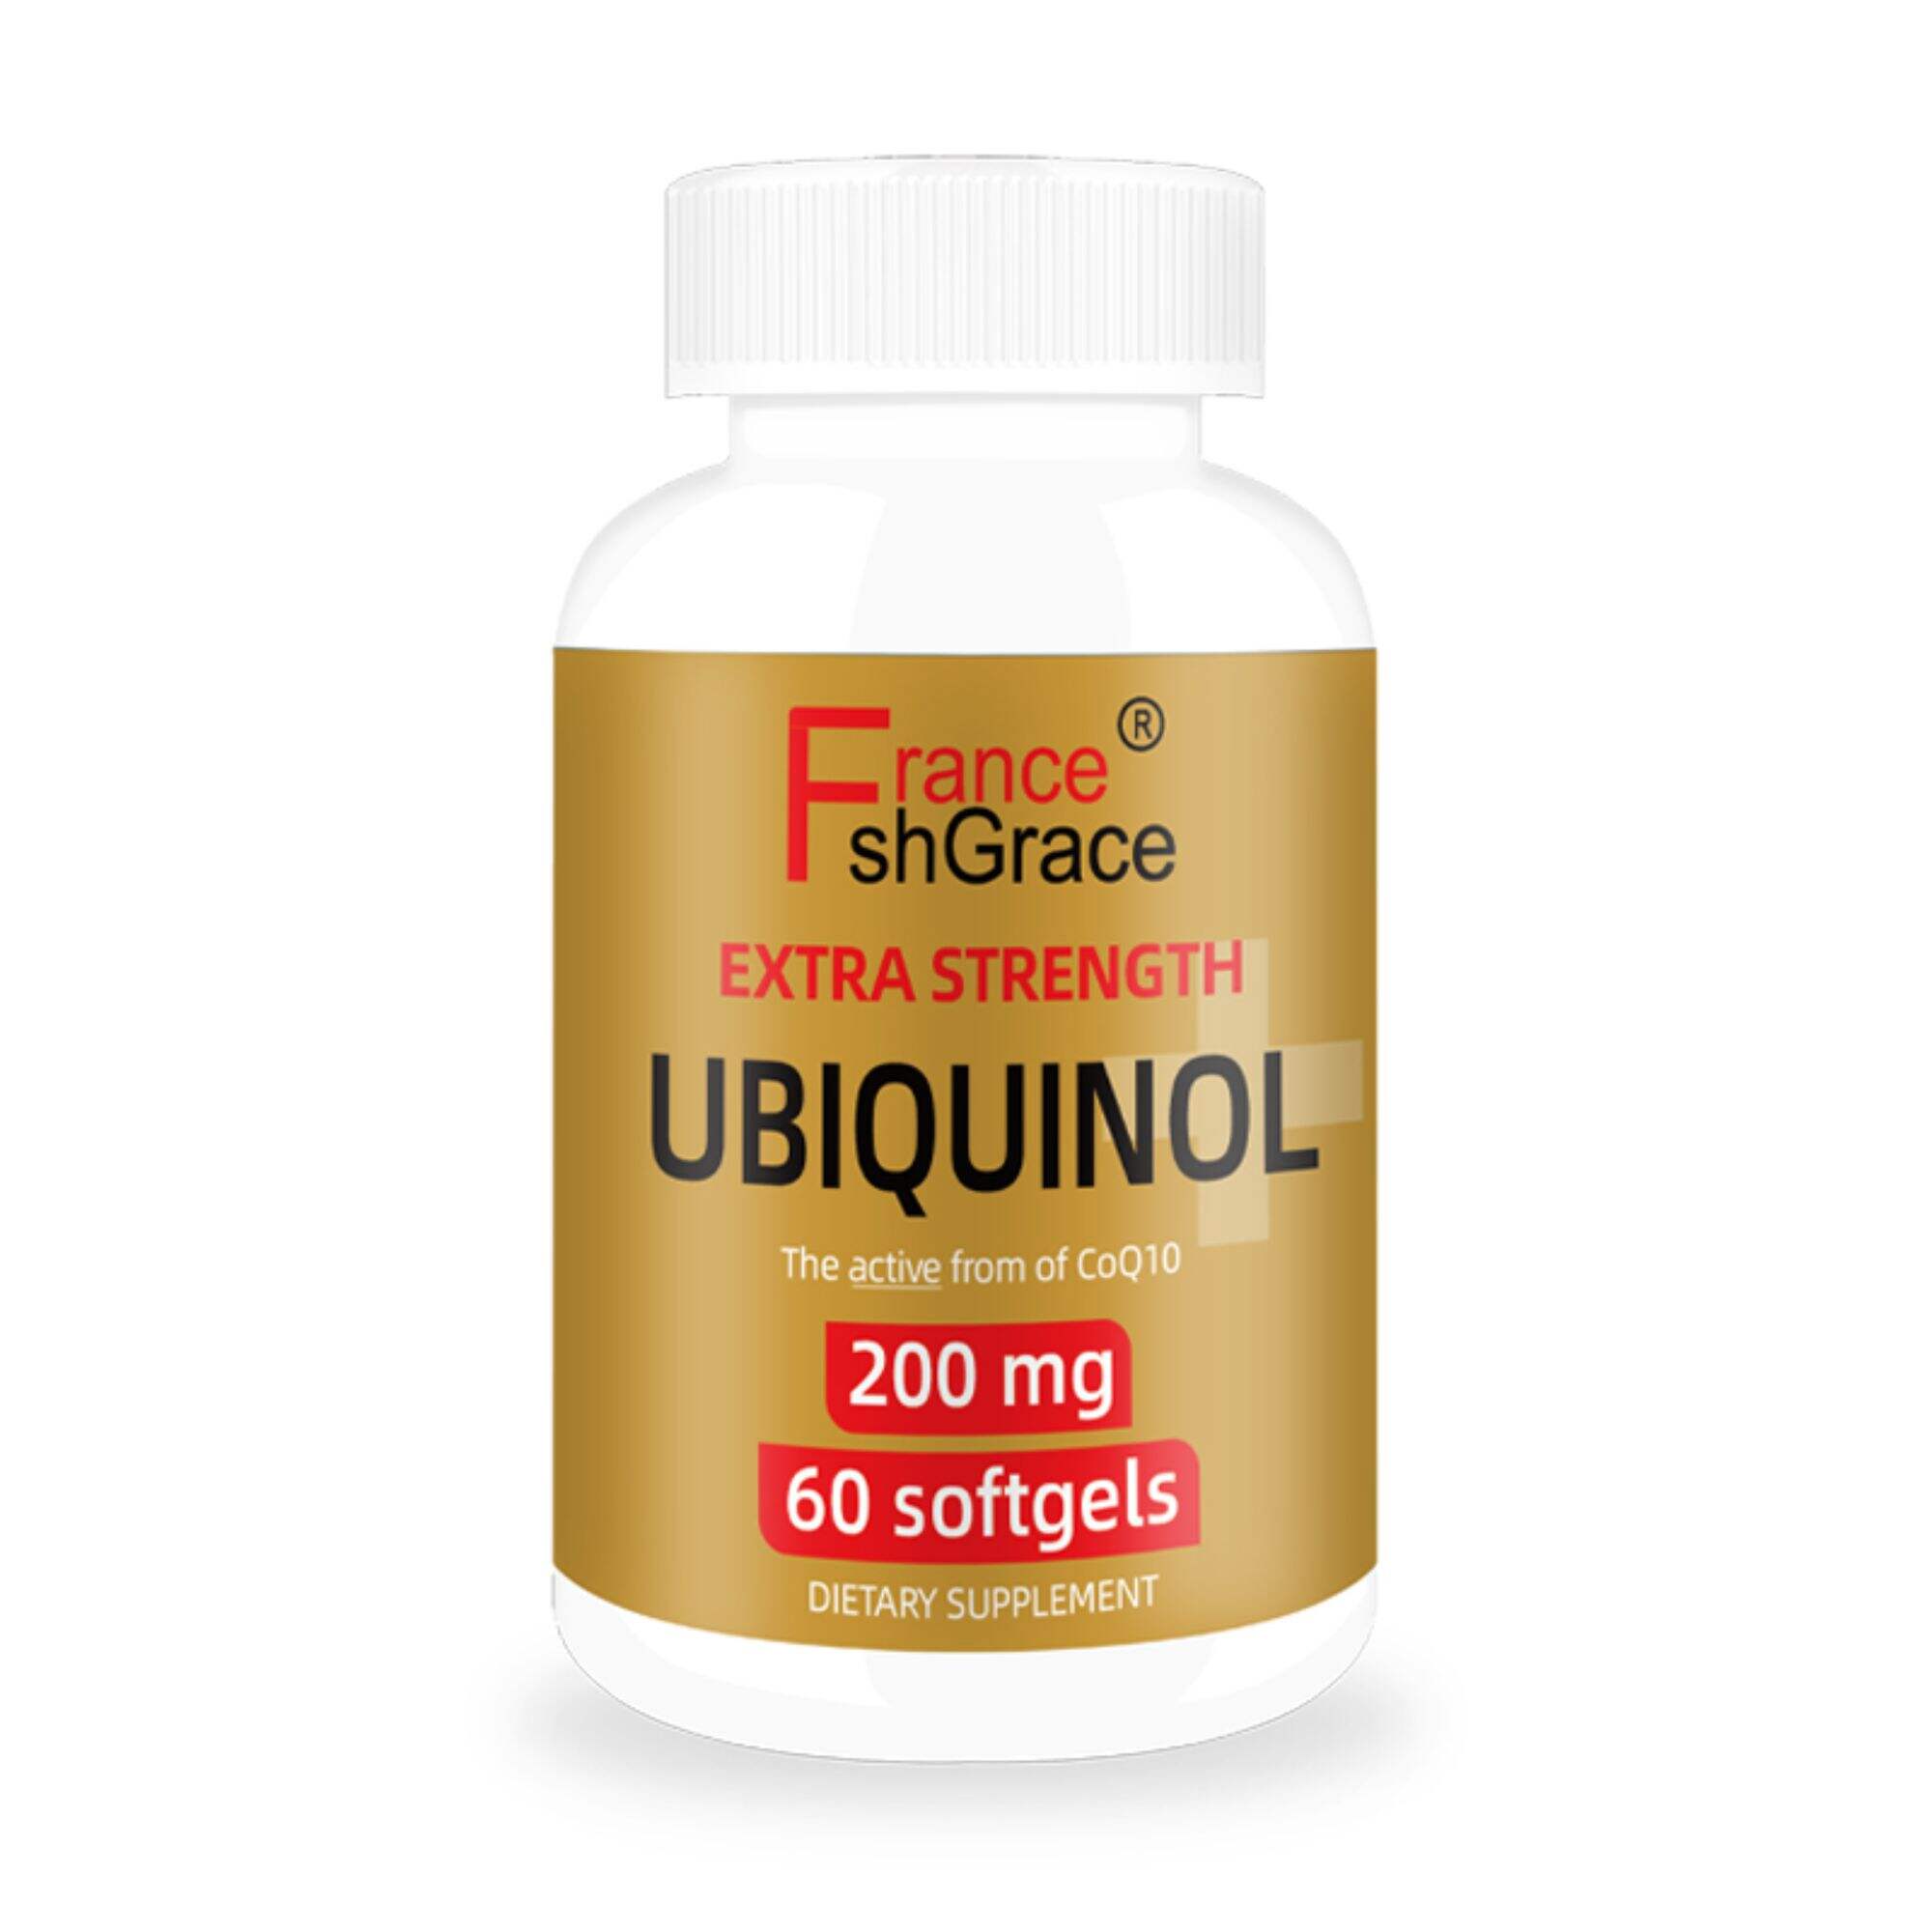 Qunol 200mg Ubiquinol สารต้านอนุมูลอิสระที่มีประสิทธิภาพสำหรับสุขภาพหัวใจและหลอดเลือด จำเป็นสำหรับการผลิตพลังงาน อาหารเสริมจากธรรมชาติ